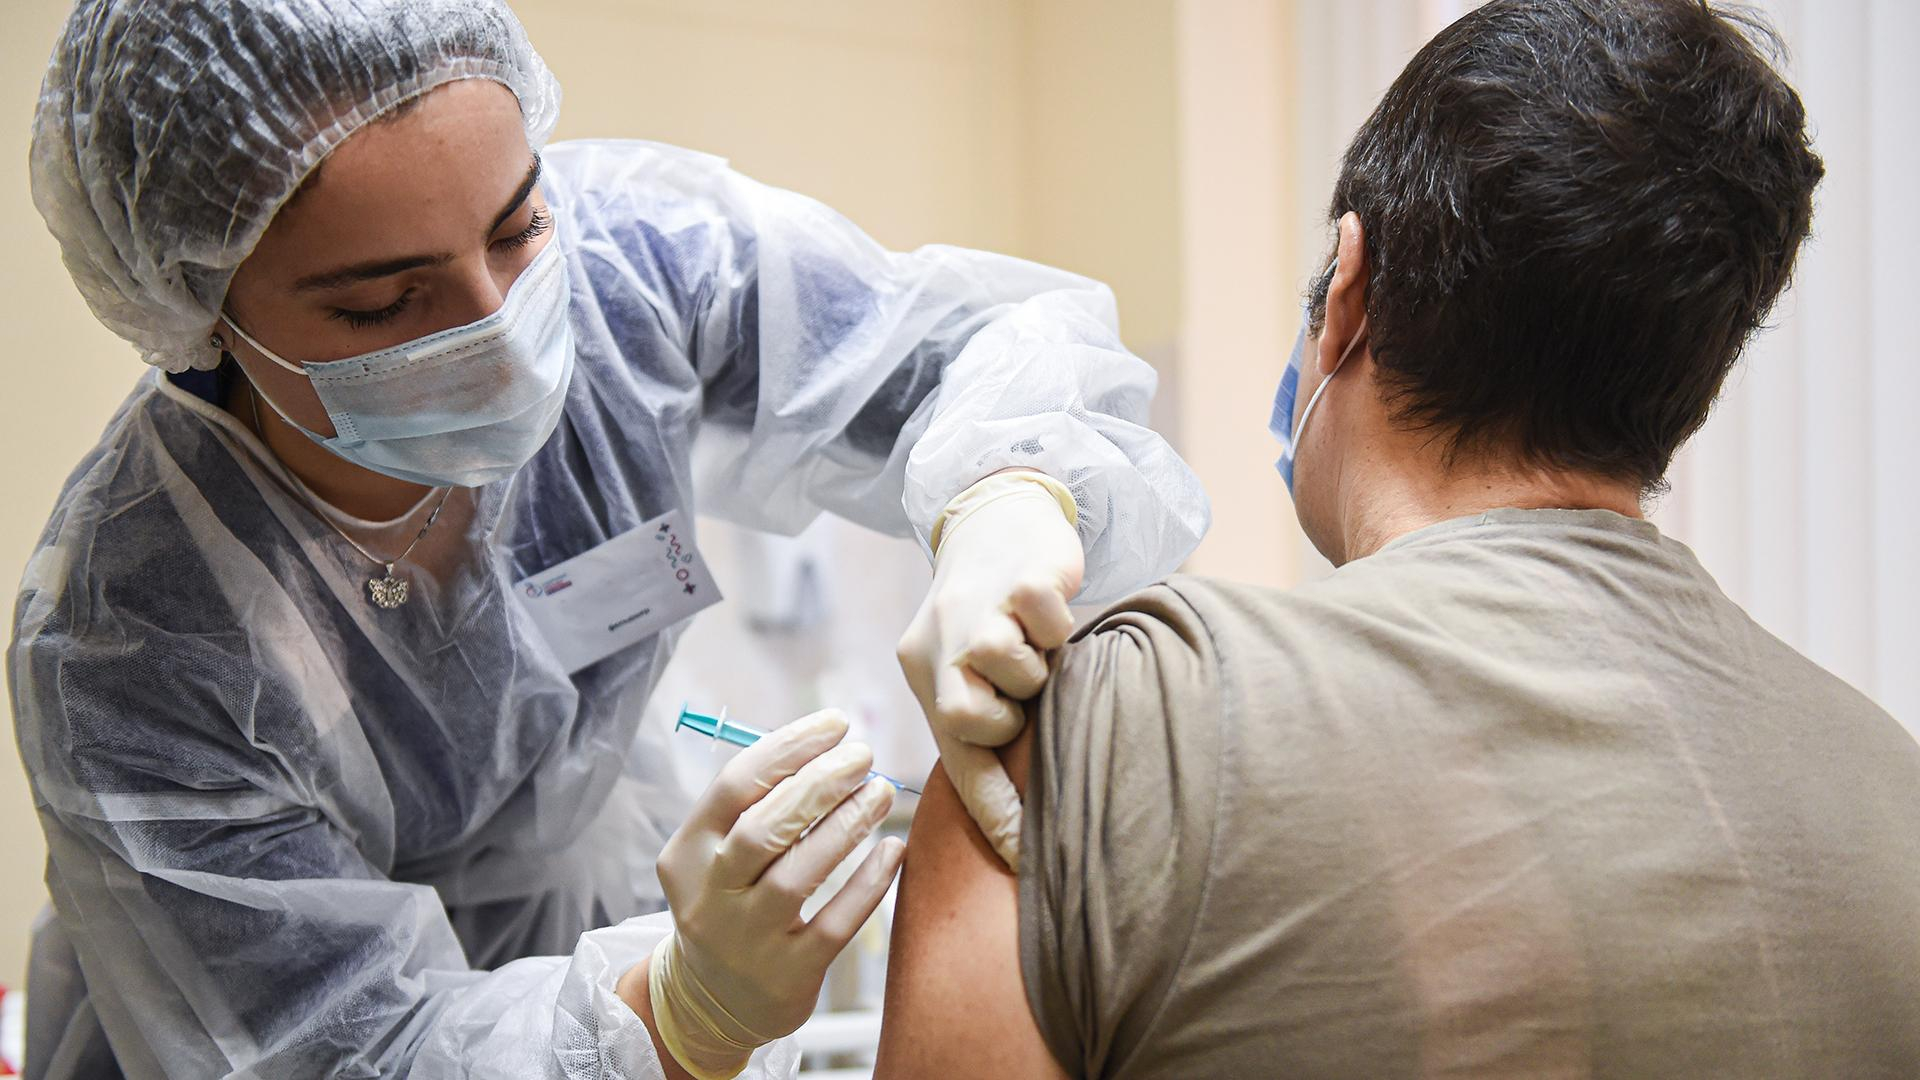 Еще два врача уволены за имитацию вакцинации - ВИДЕО